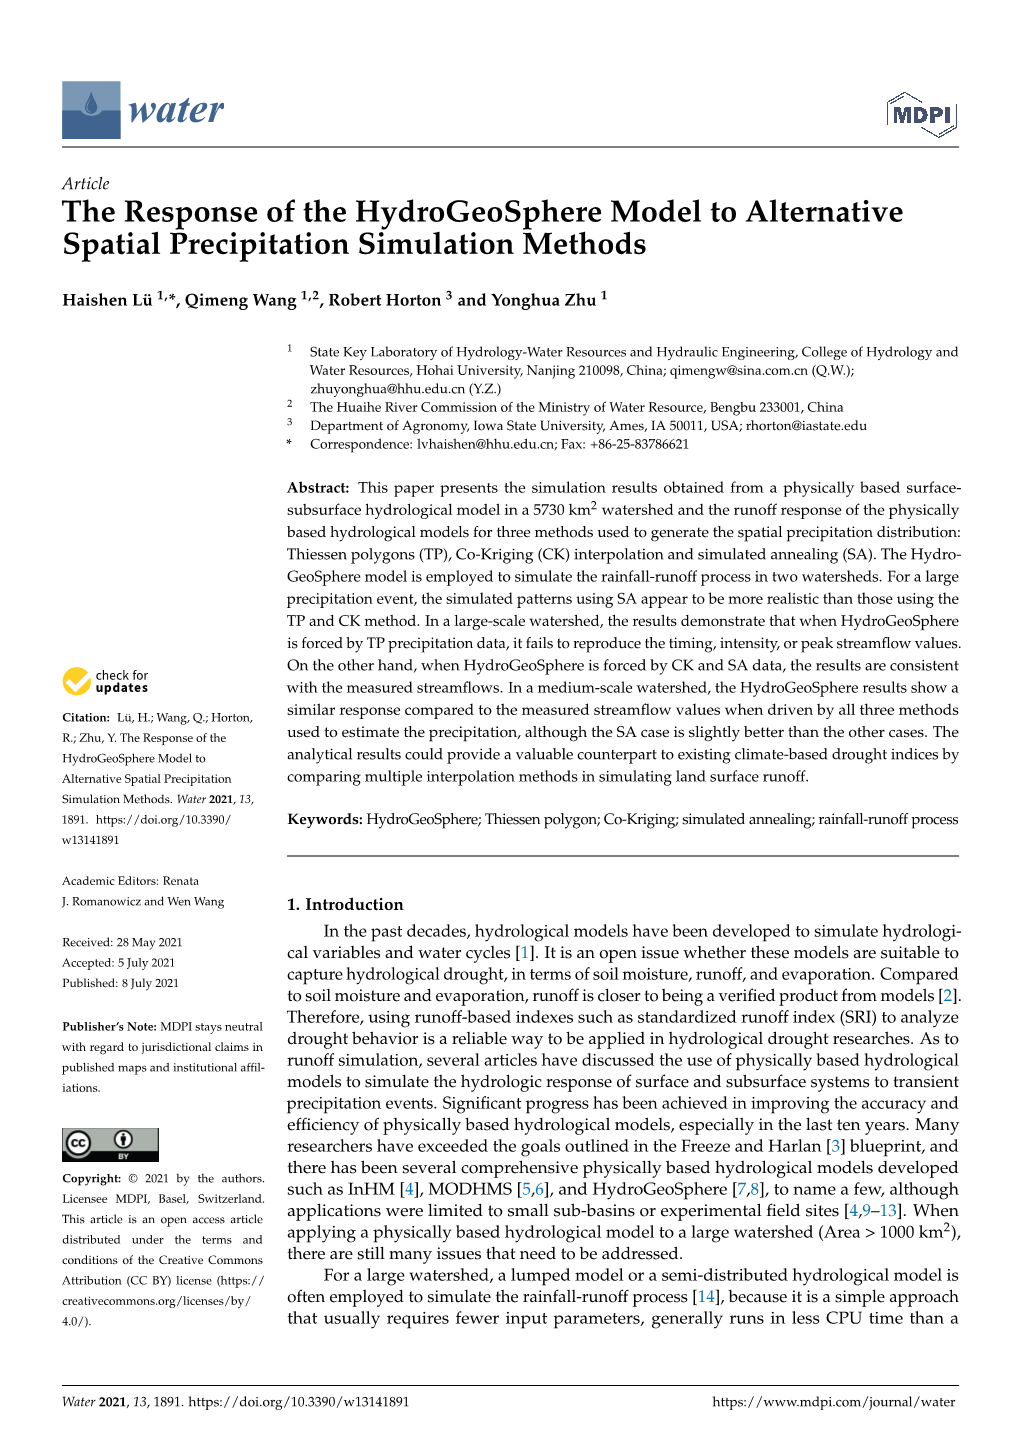 The Response of the Hydrogeosphere Model to Alternative Spatial Precipitation Simulation Methods